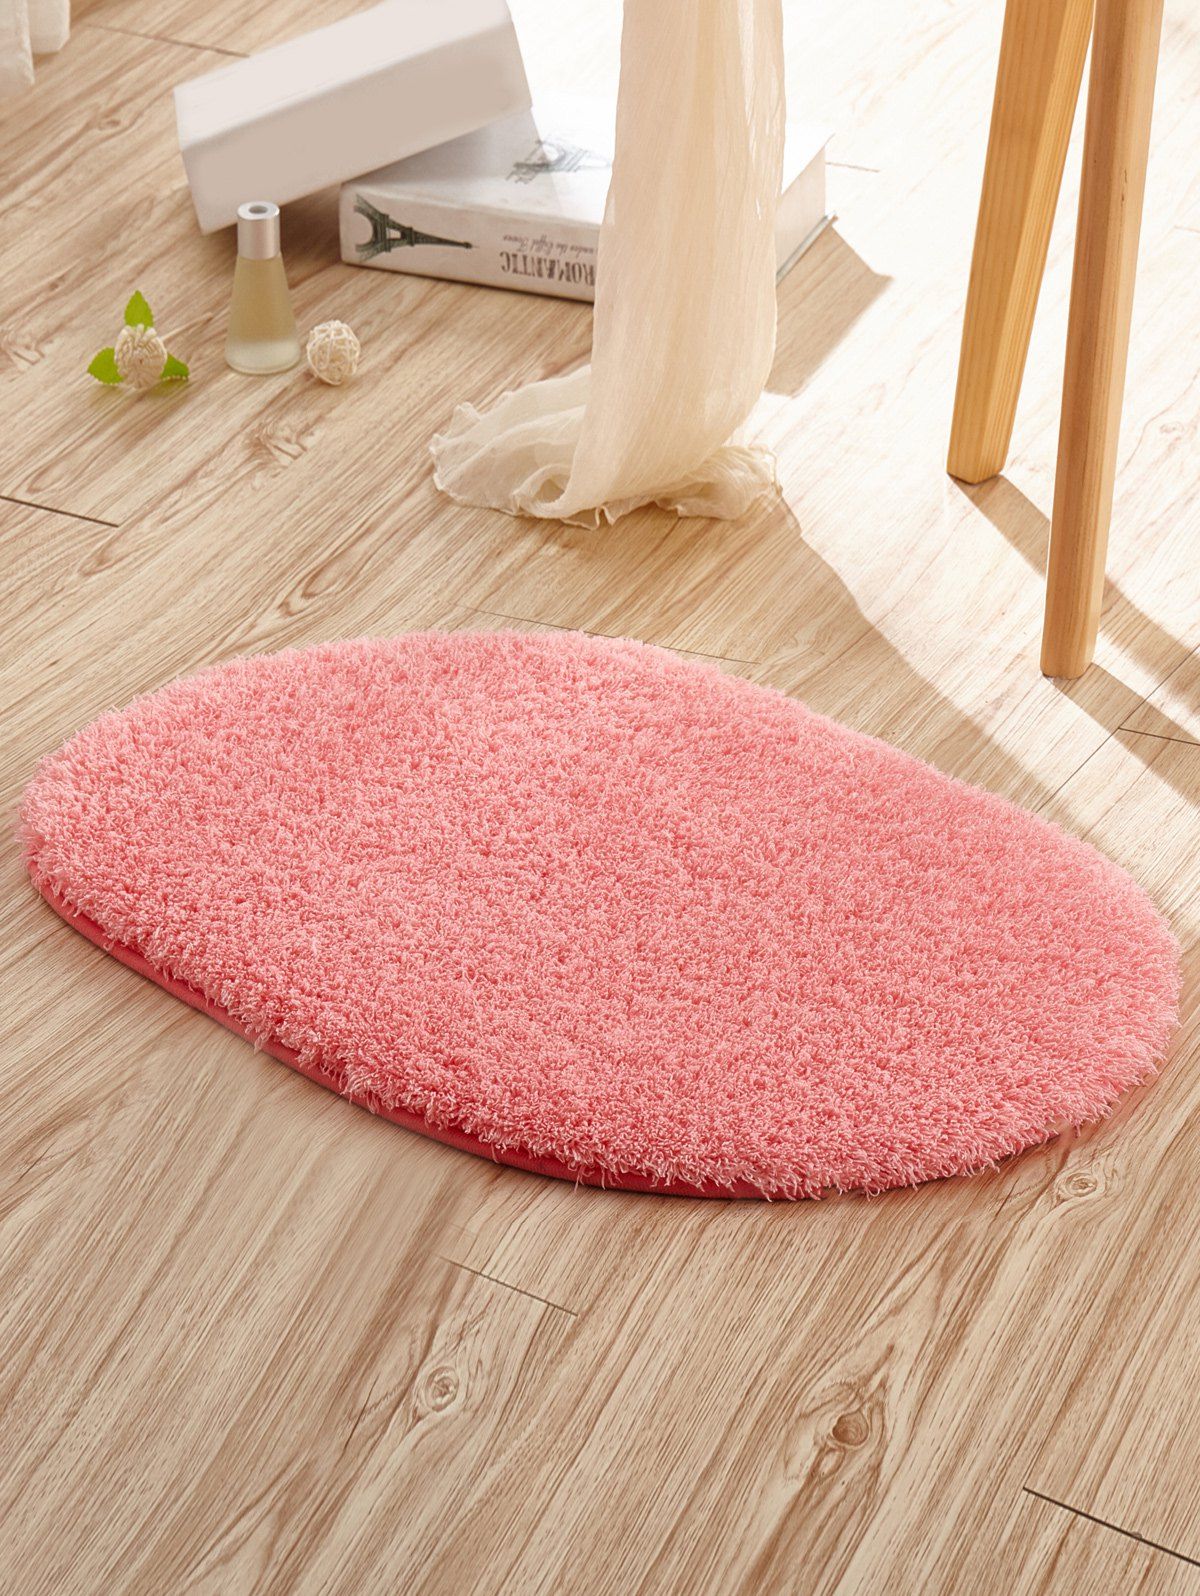 2018 Coral Fleece Antislip Bathroom Door Oval Carpet PEACH ...